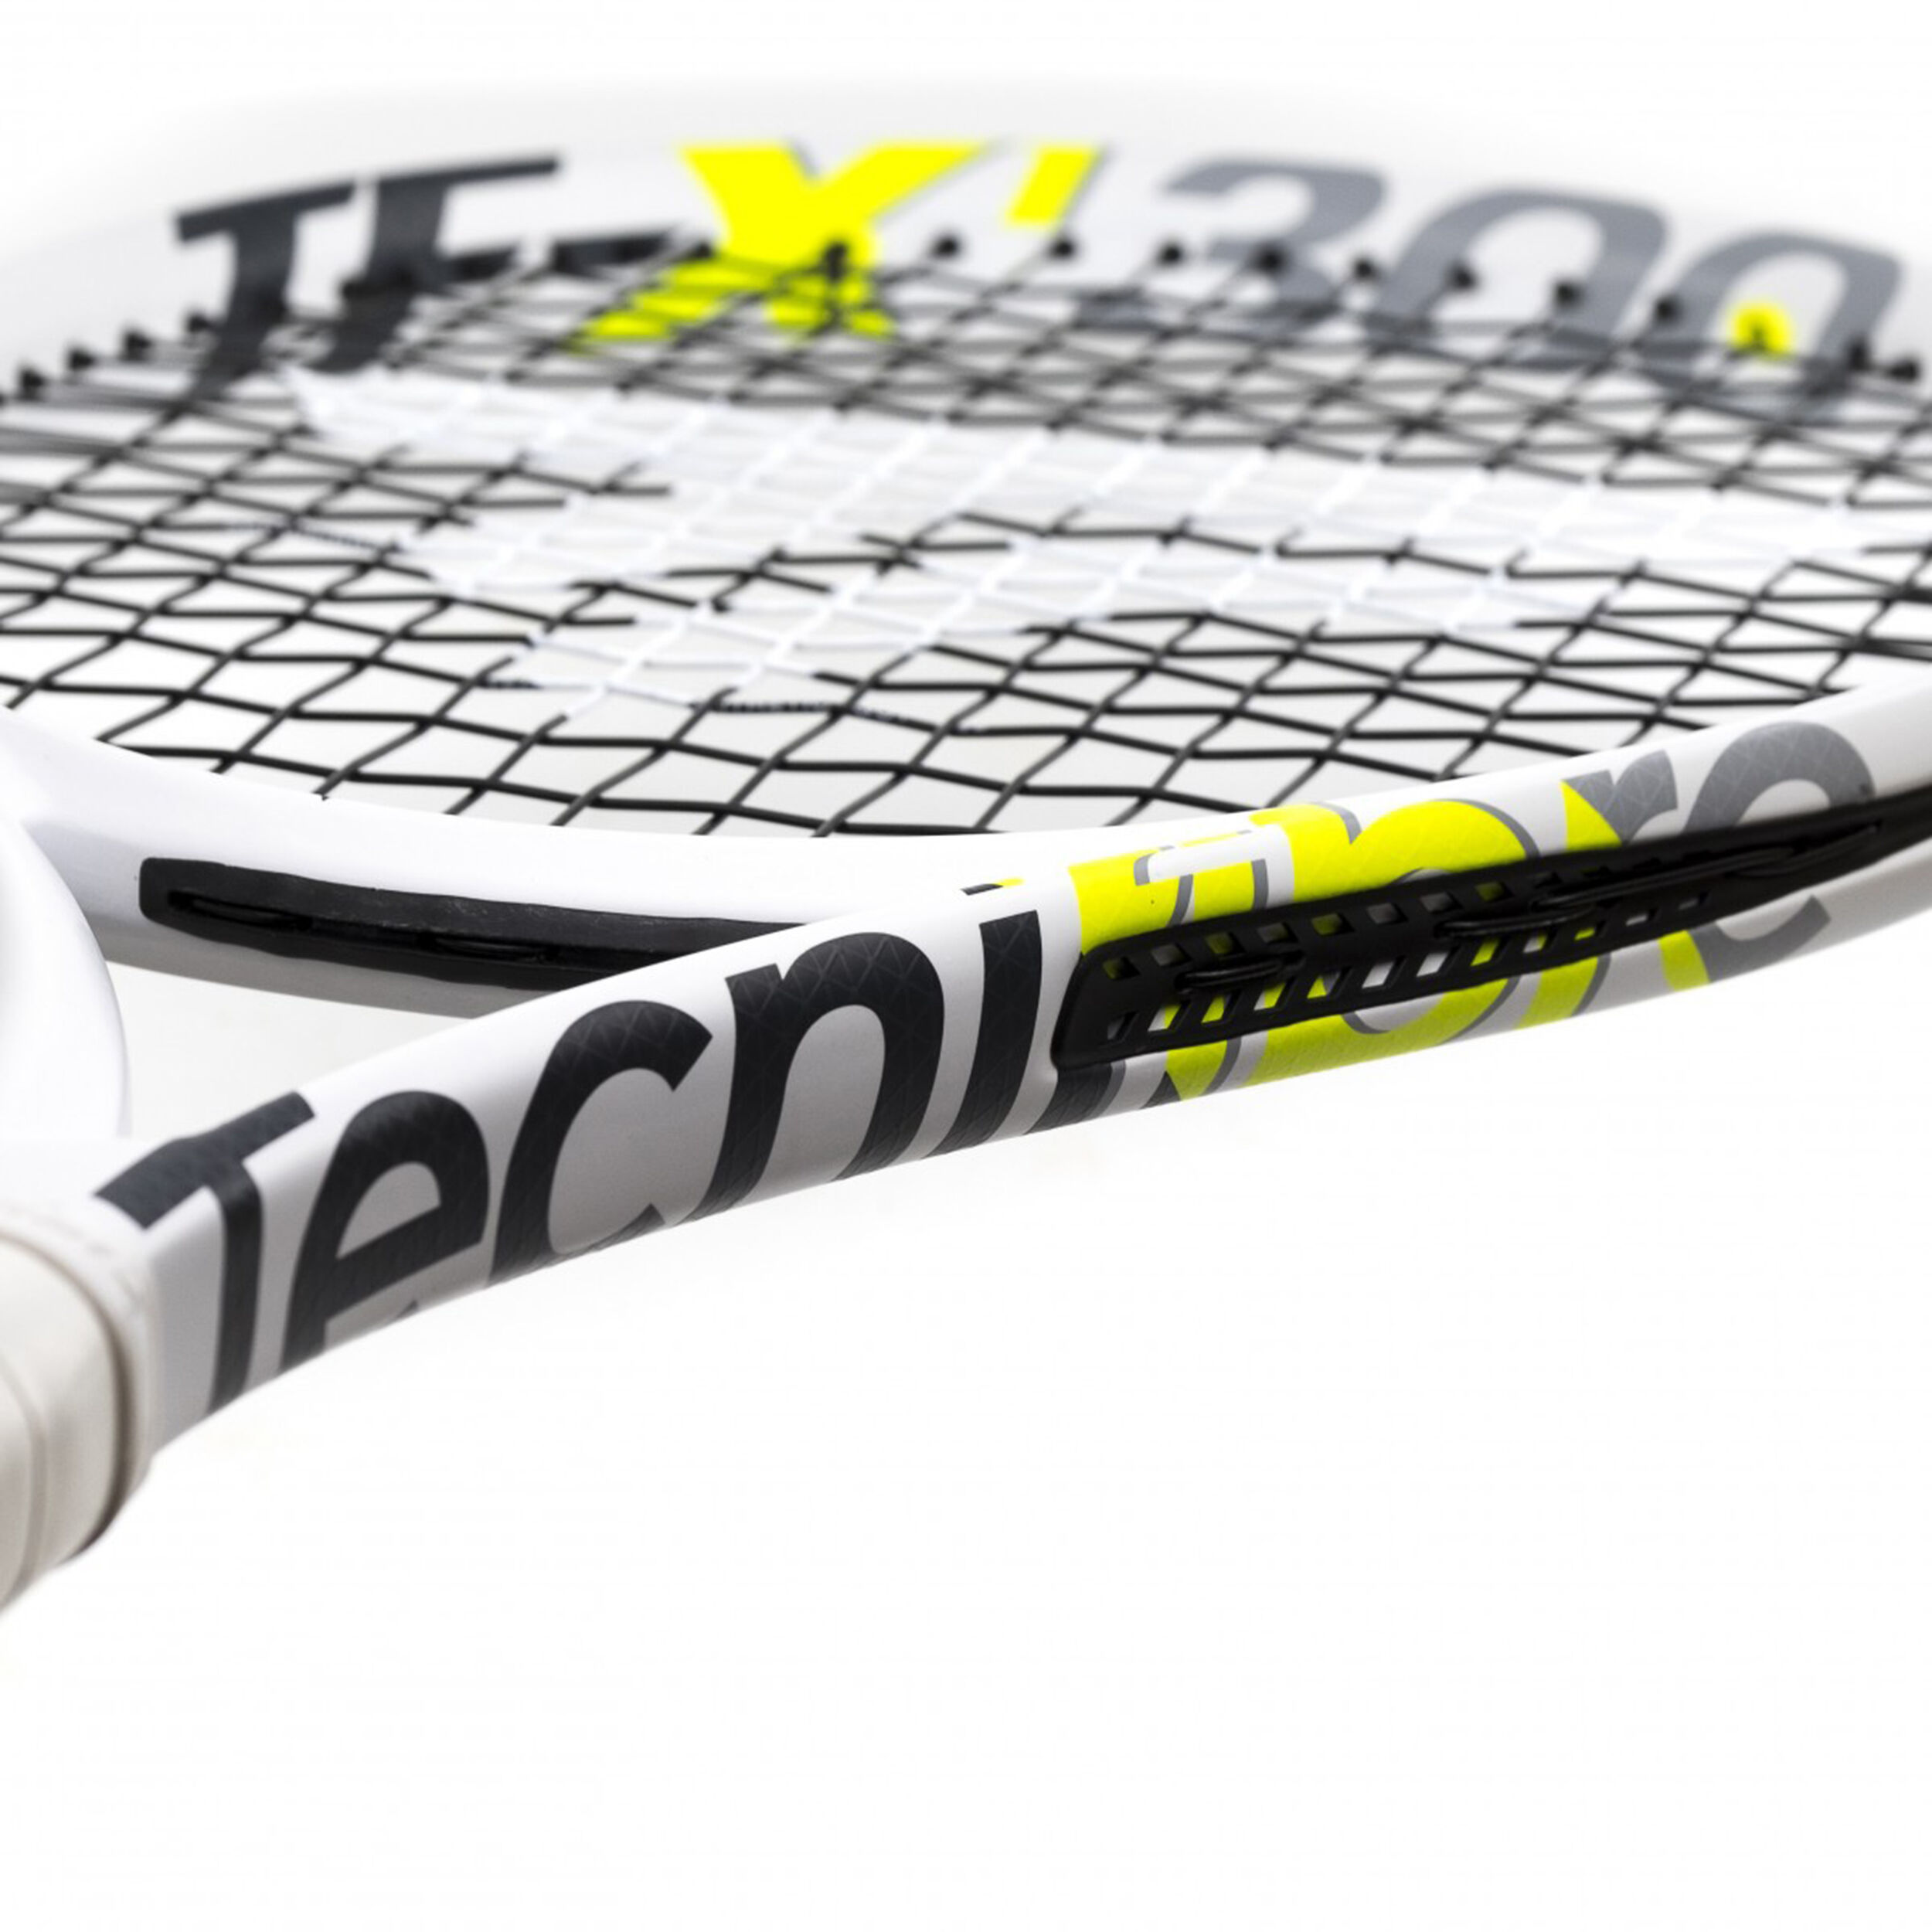 Buy Tecnifibre TF-X1 300 online | Tennis Point COM